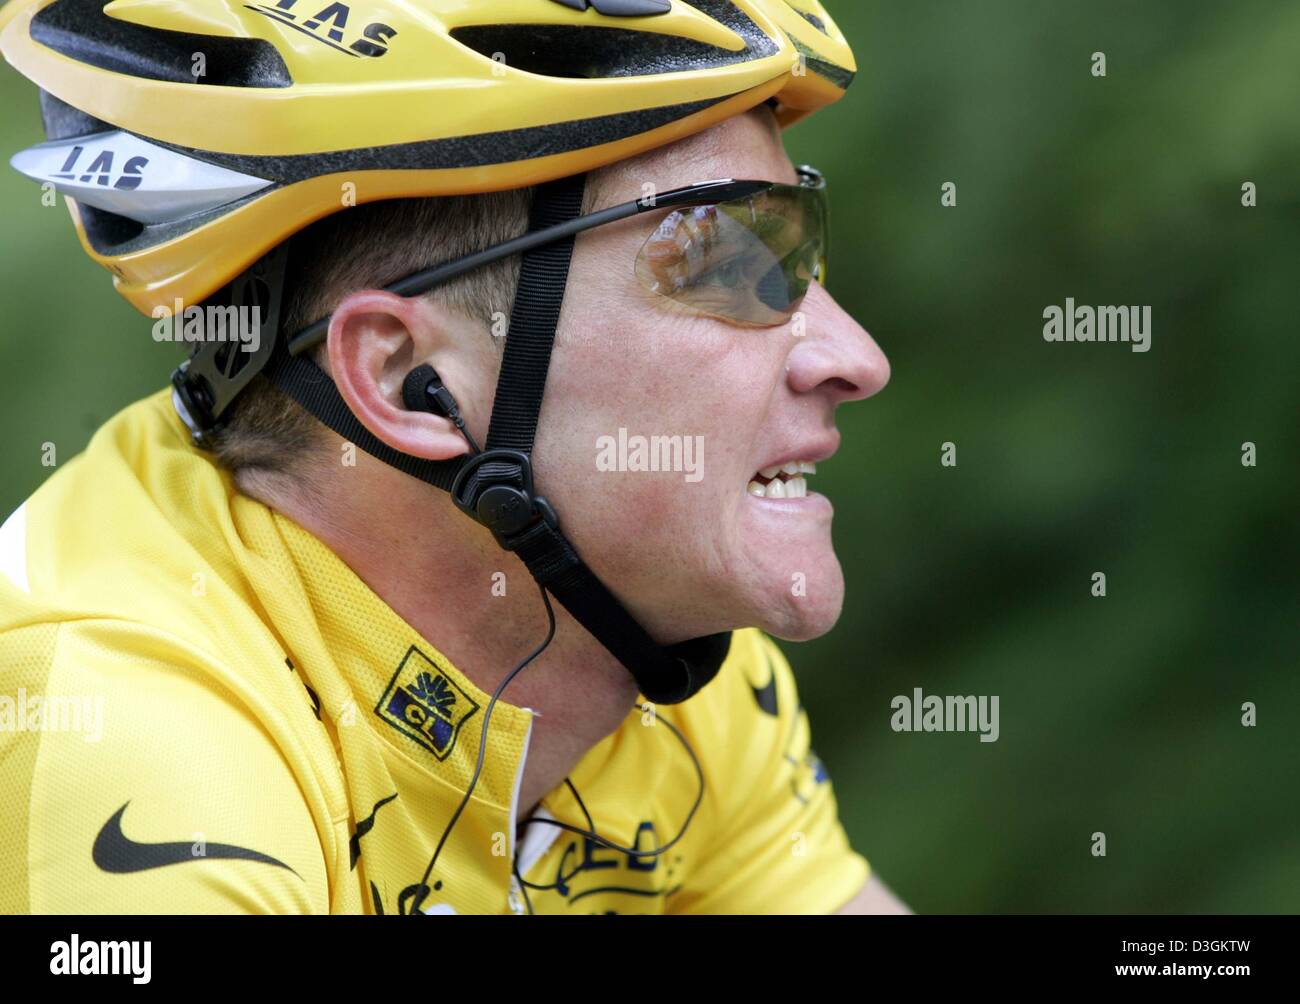 Dpa) - 25-año-viejo ciclista francés Thomas Voeckler, del equipo Brioches la Boulangere lleva el líder de la carrera el maillot amarillo durante la novena etapa del Tour Francia, carrera de ciclismo